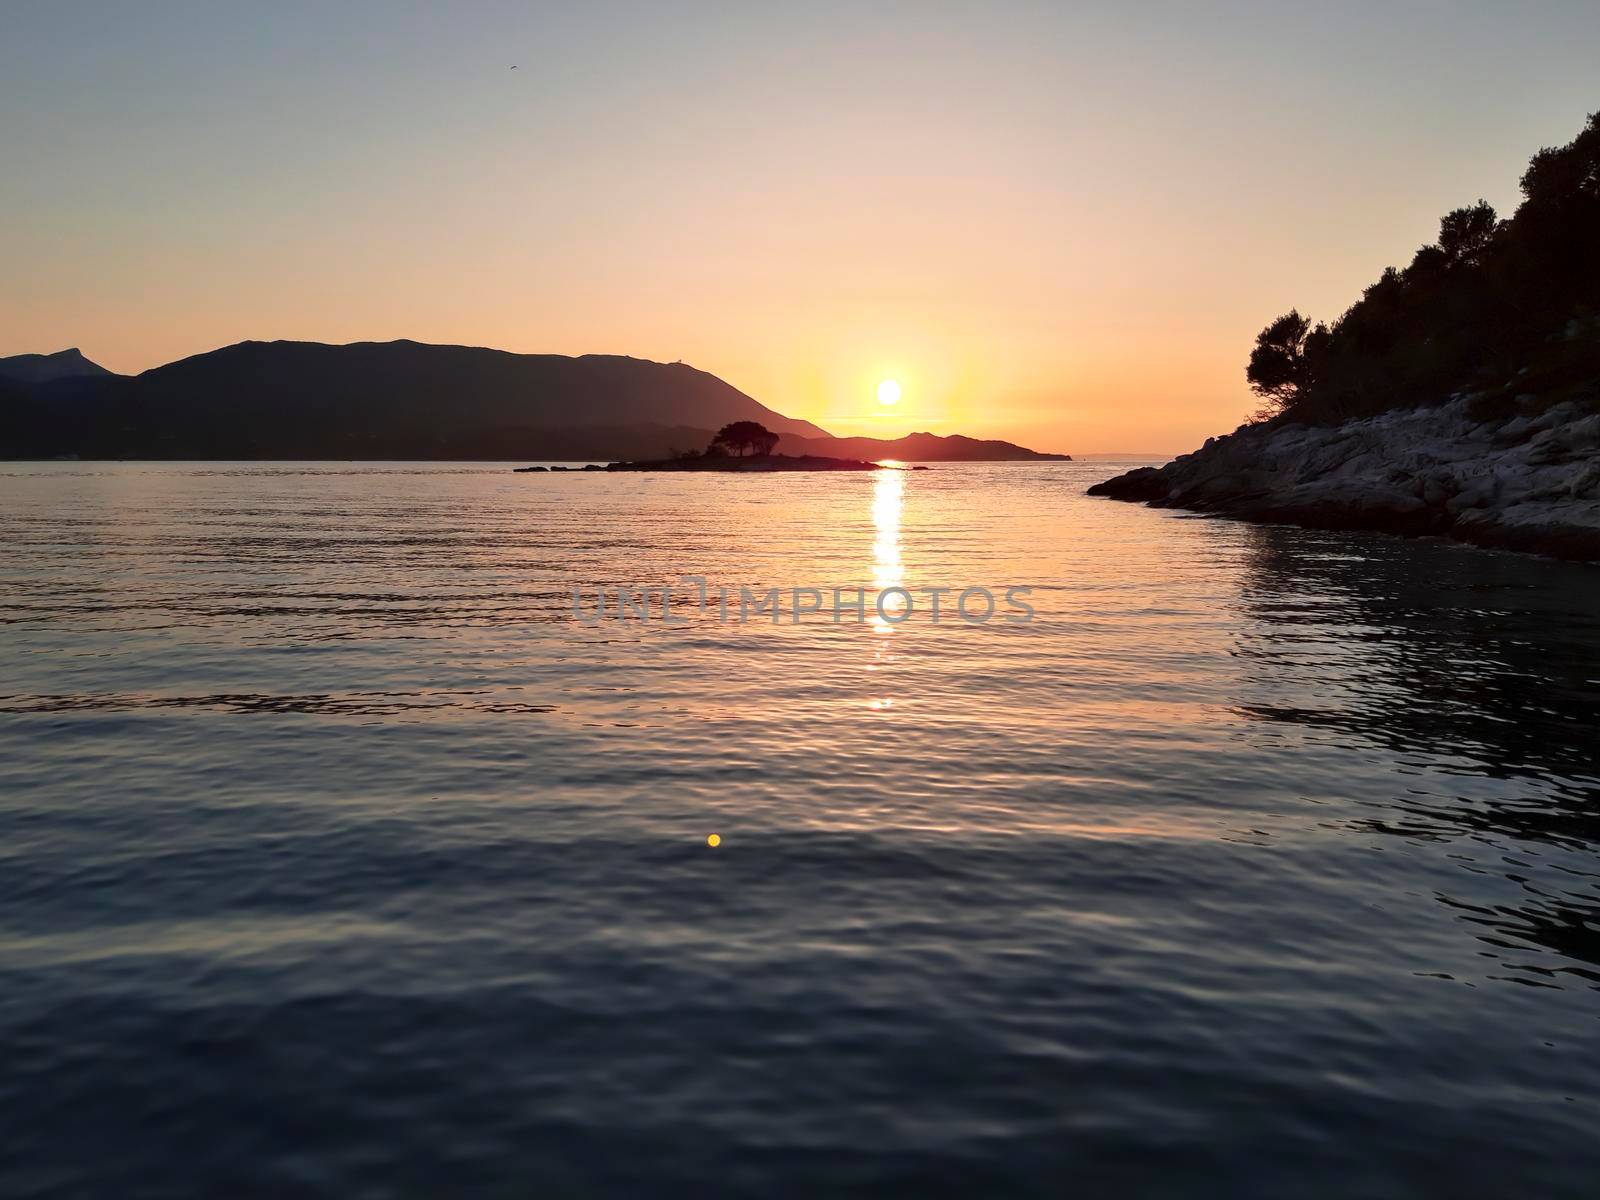 Sunset At Adriatic Sea Croatia  by swissChard7